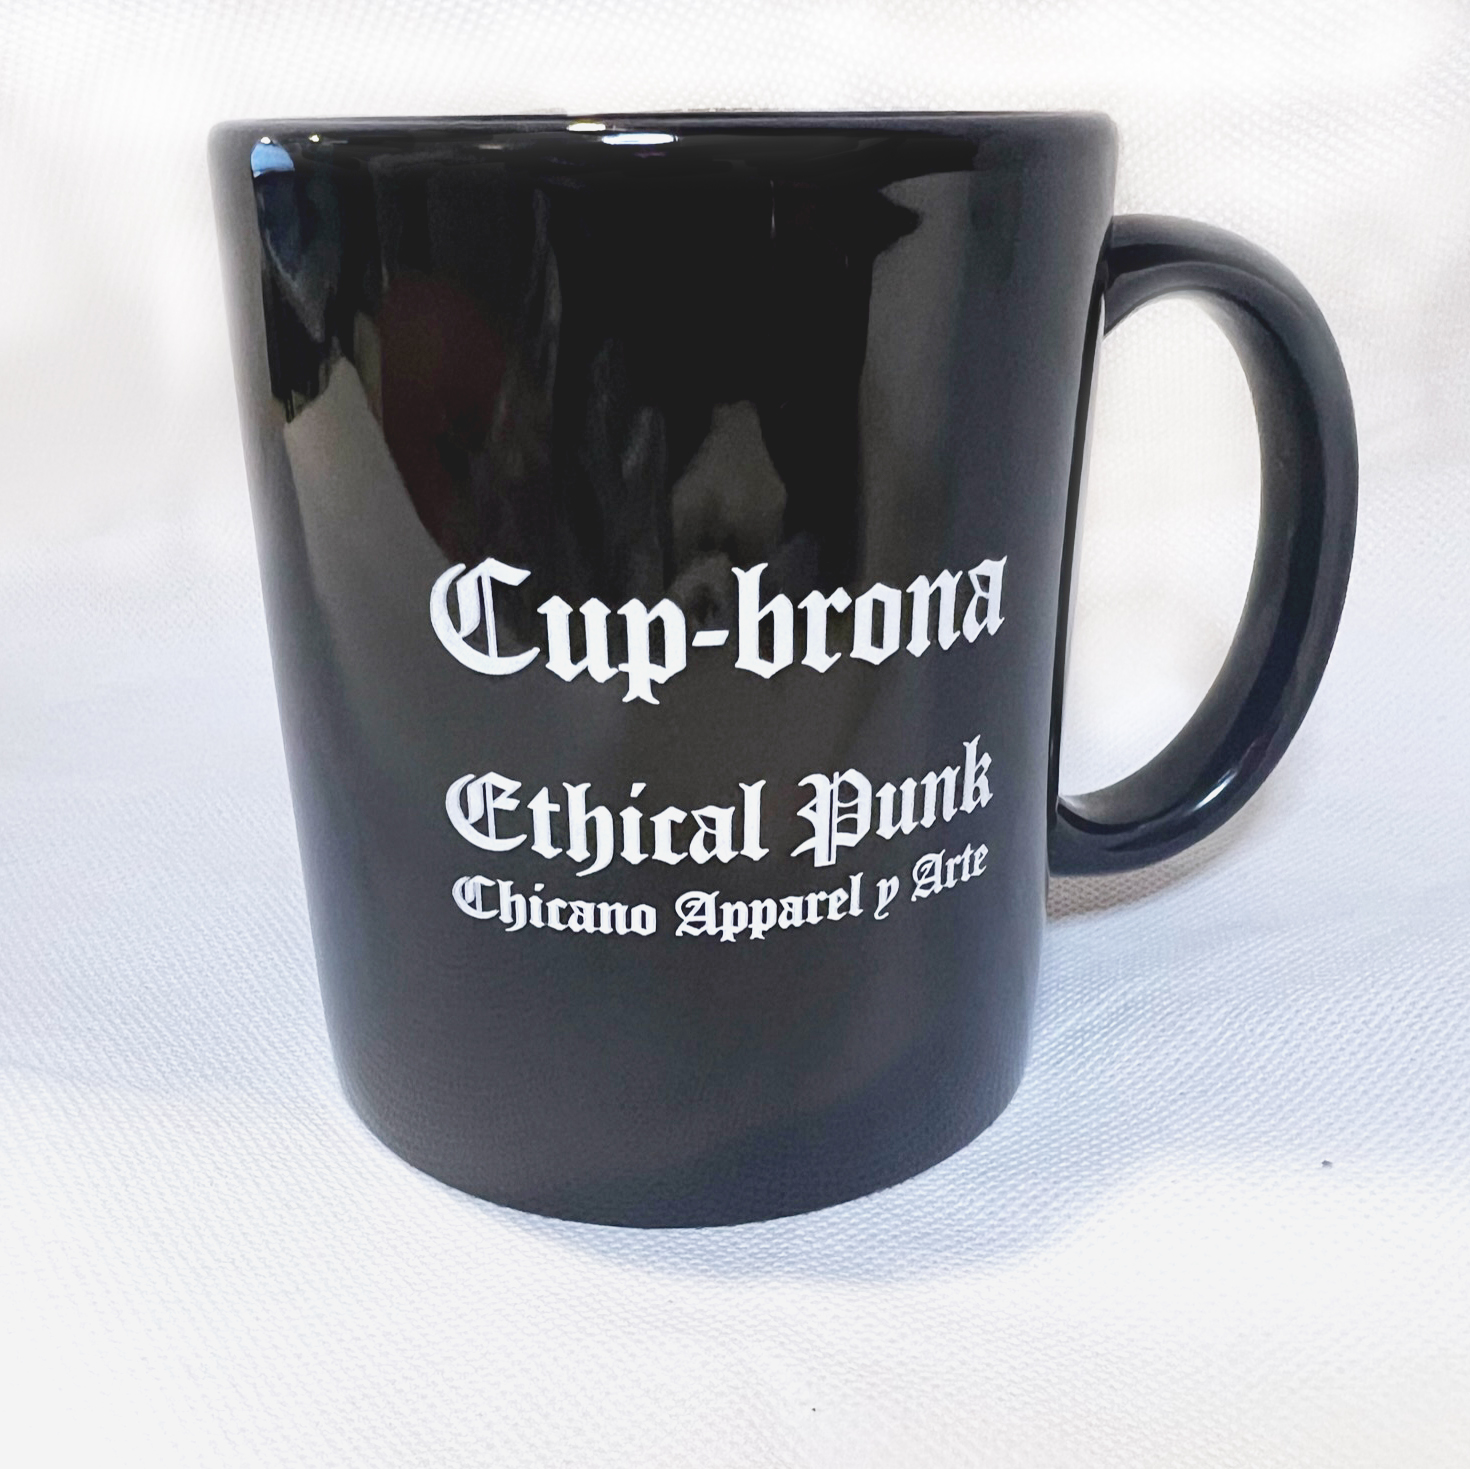 Cup-Brona mug on a white background